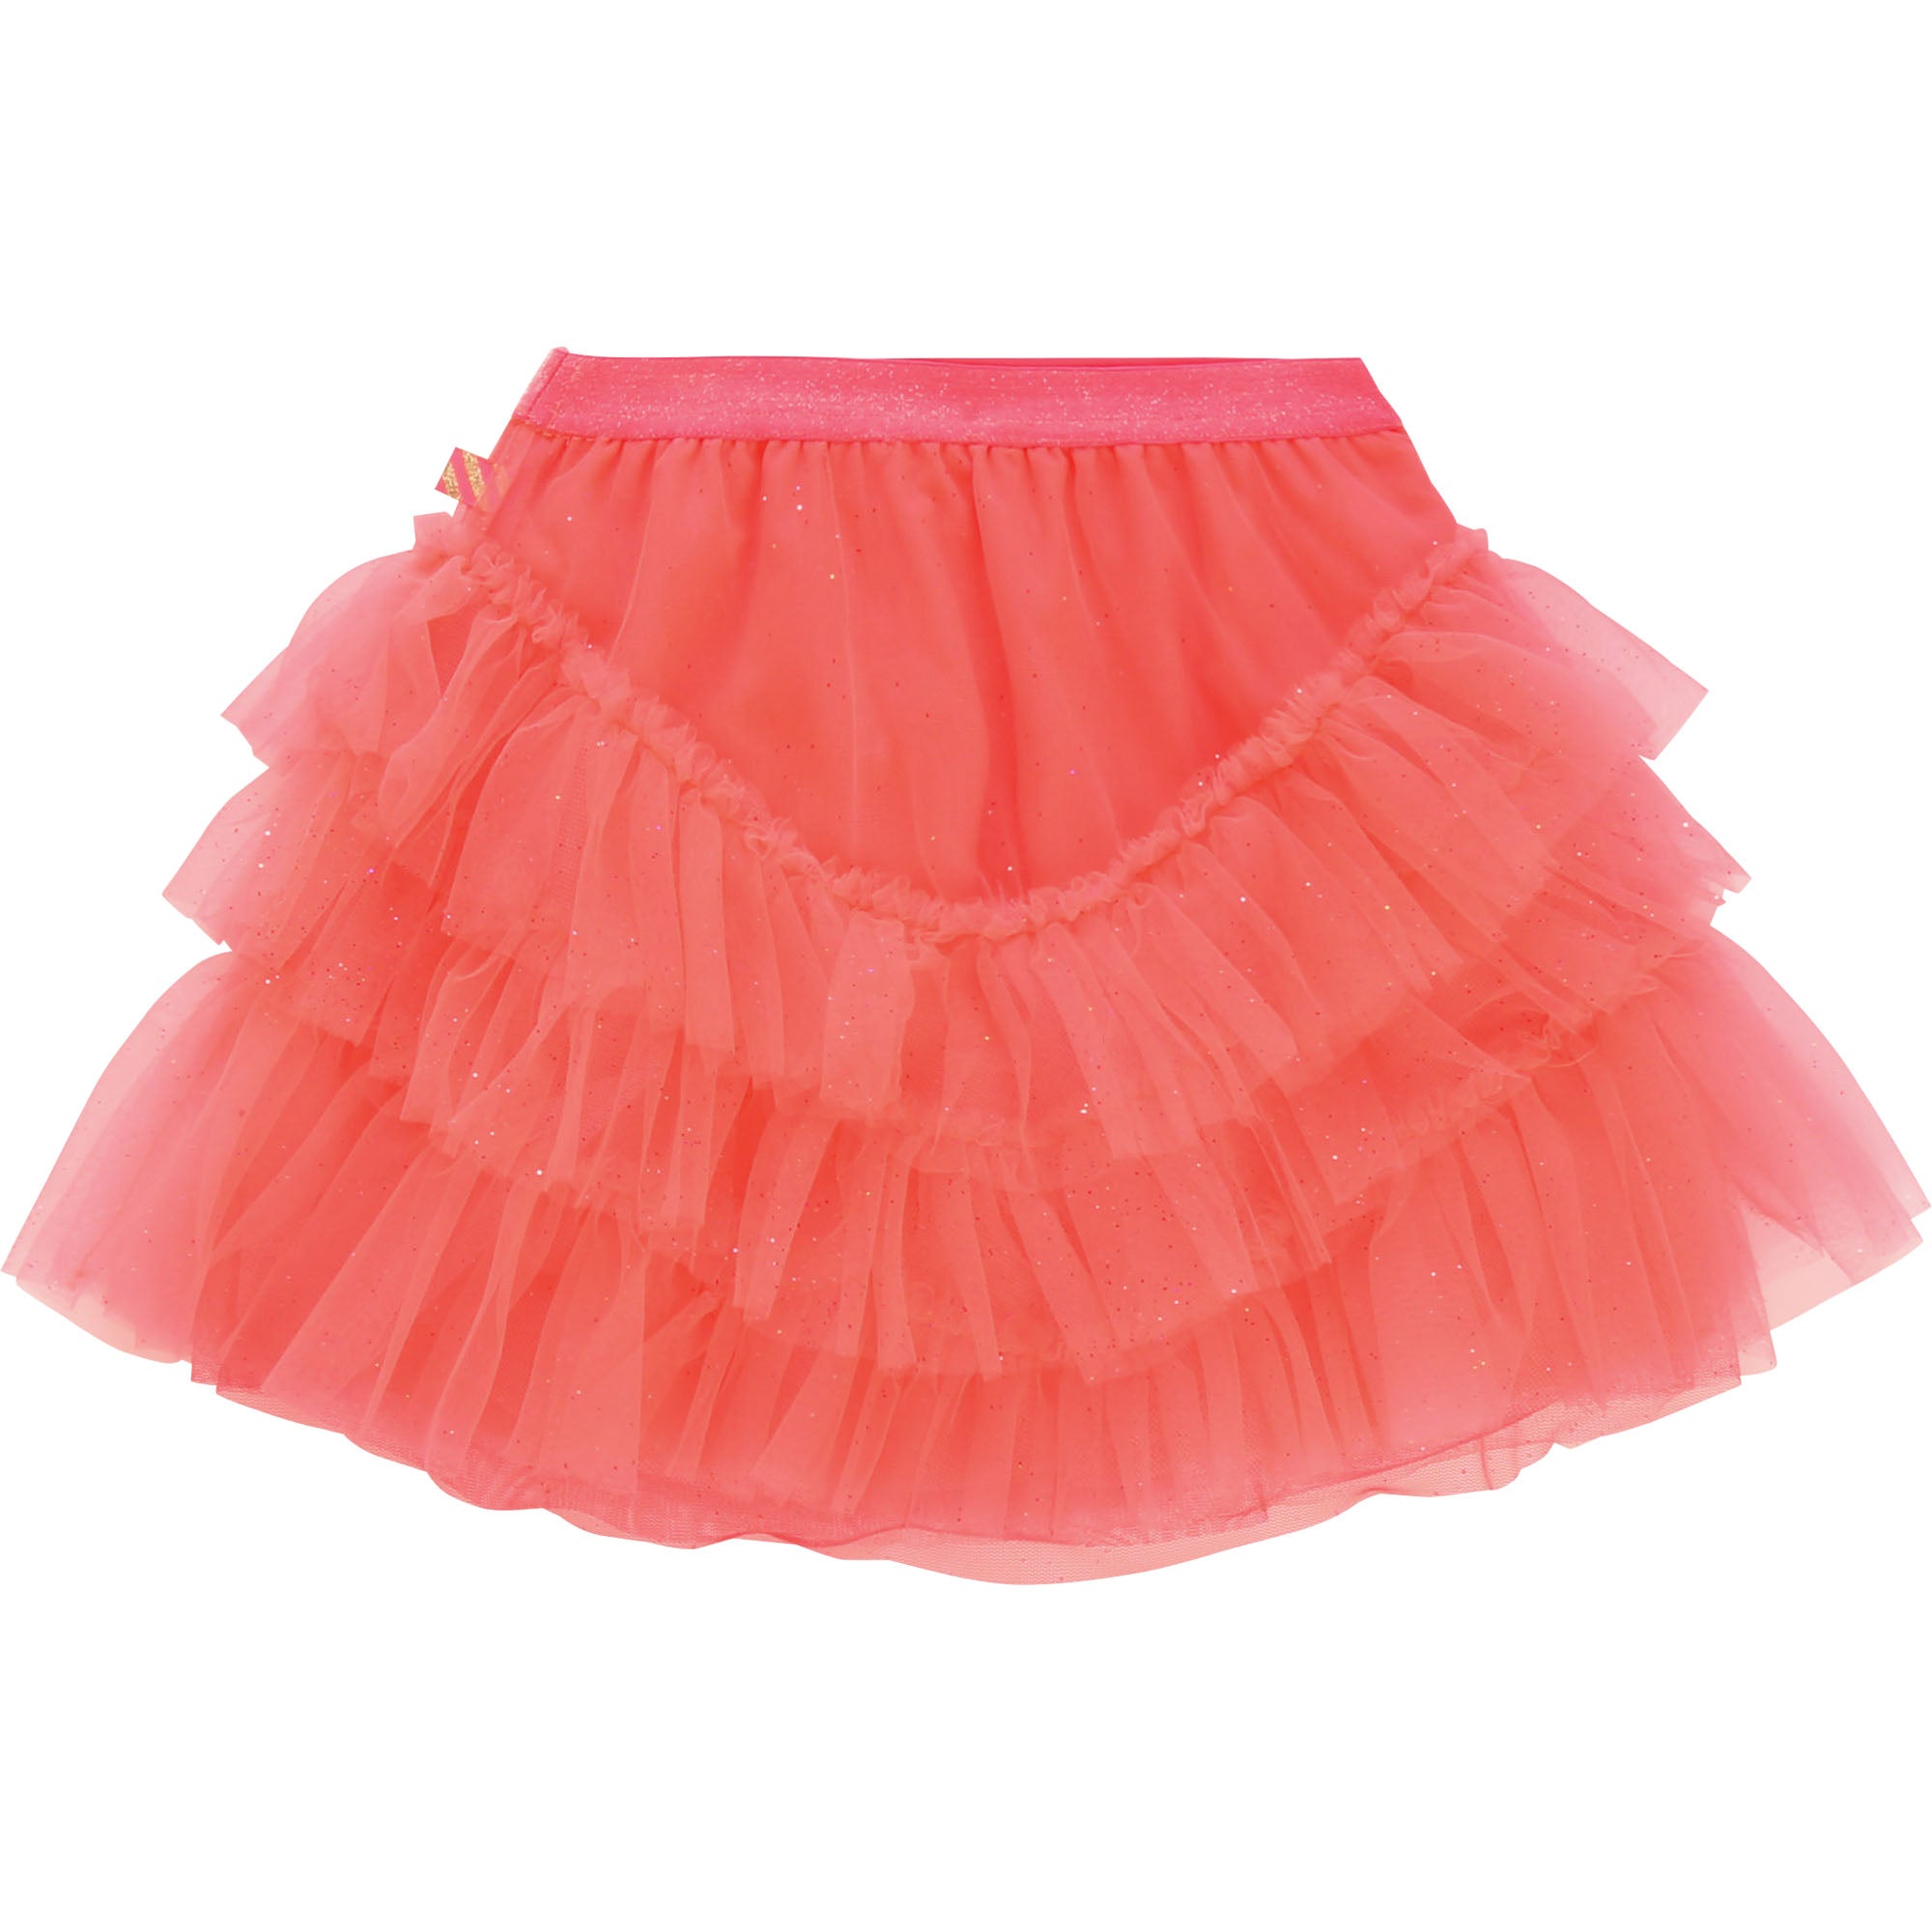 Girls Bright Pink Frill Tulle Skirt